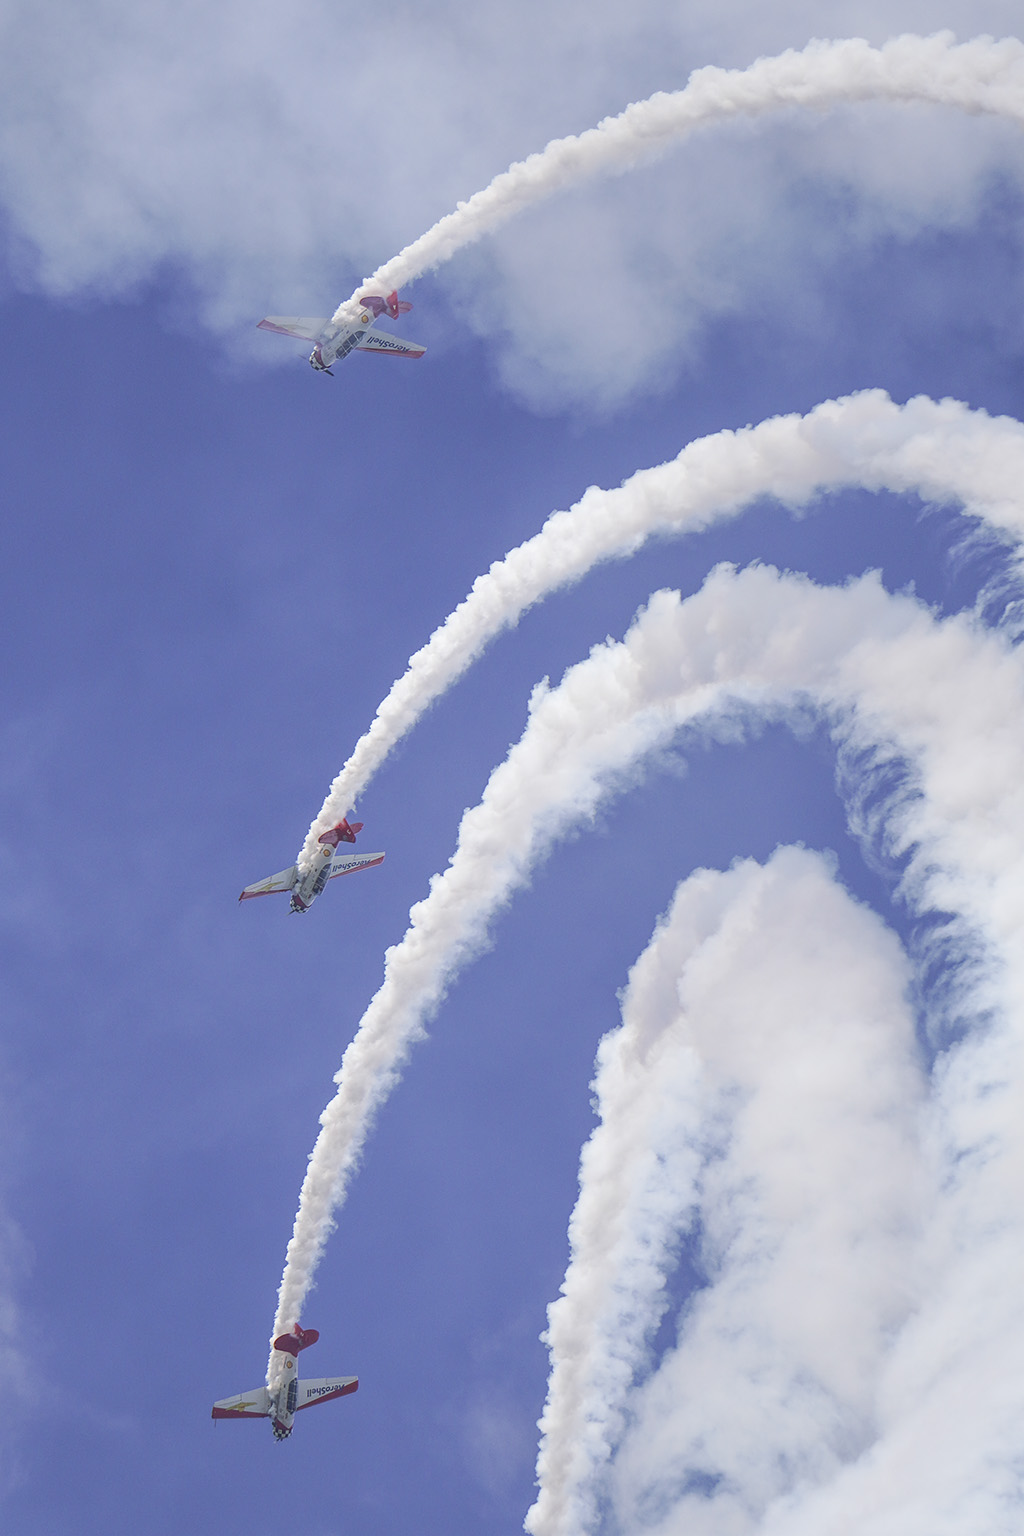 AeroShell Aerobatic Team by Renee Nalley